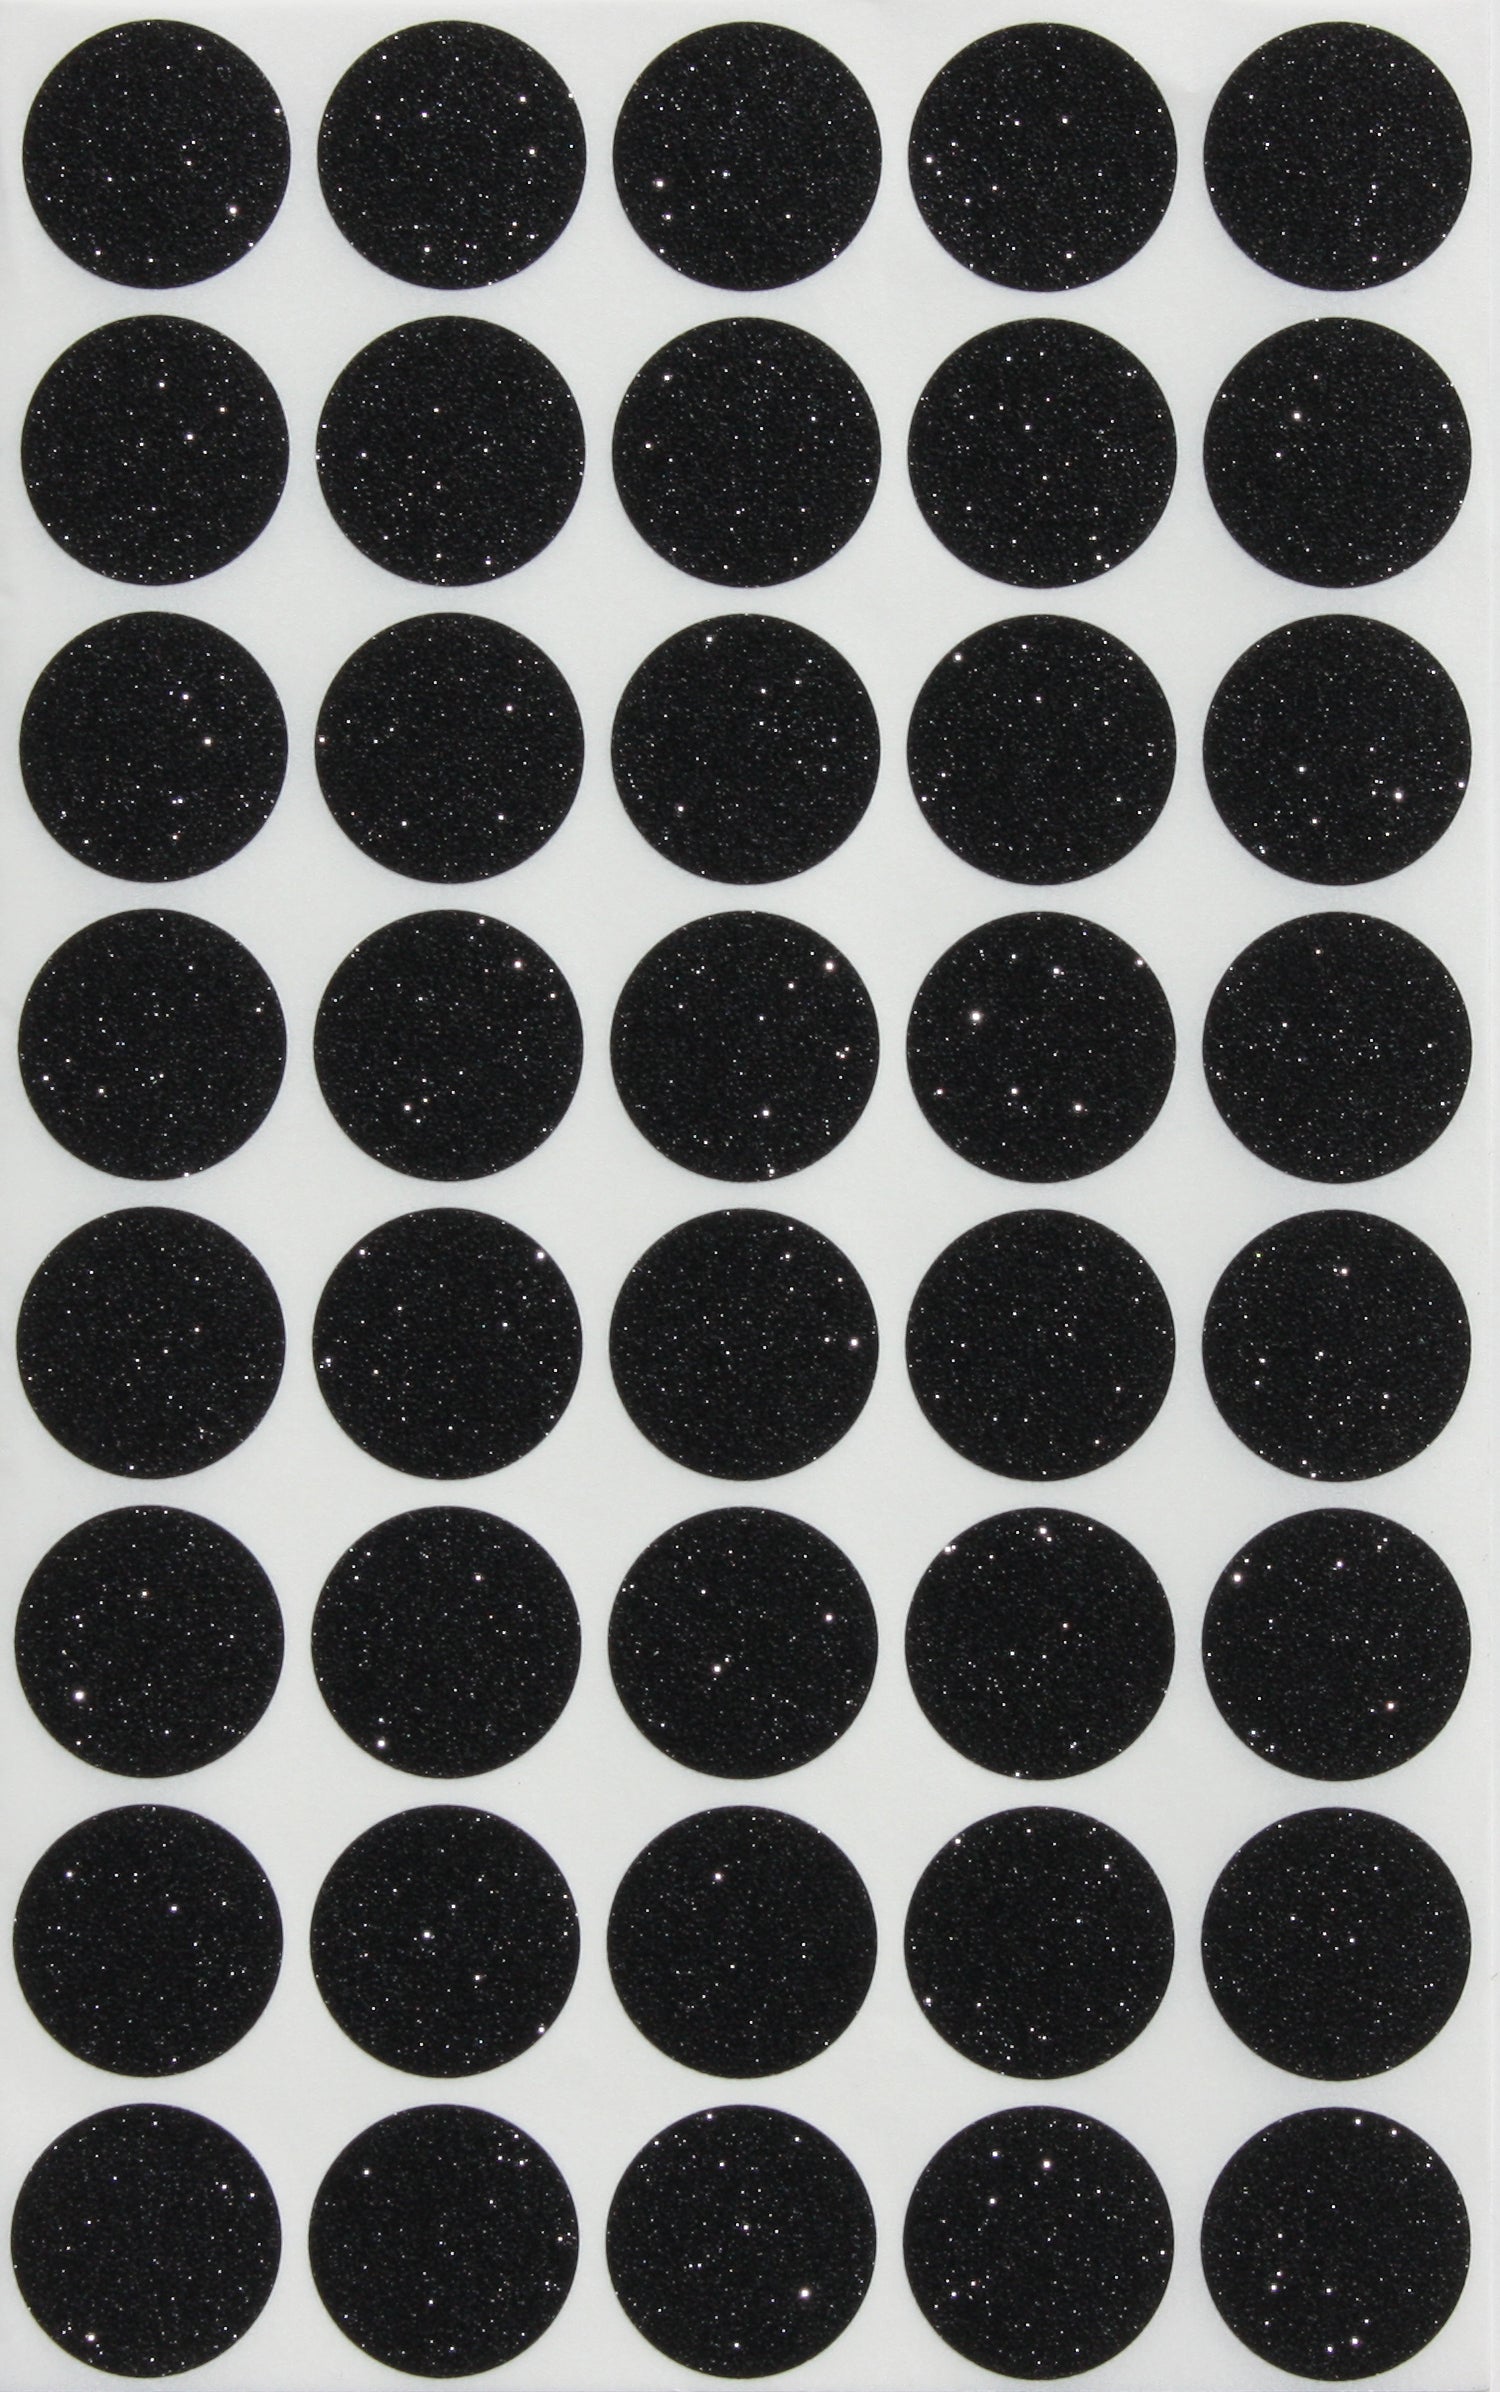 19mm white sticker dots